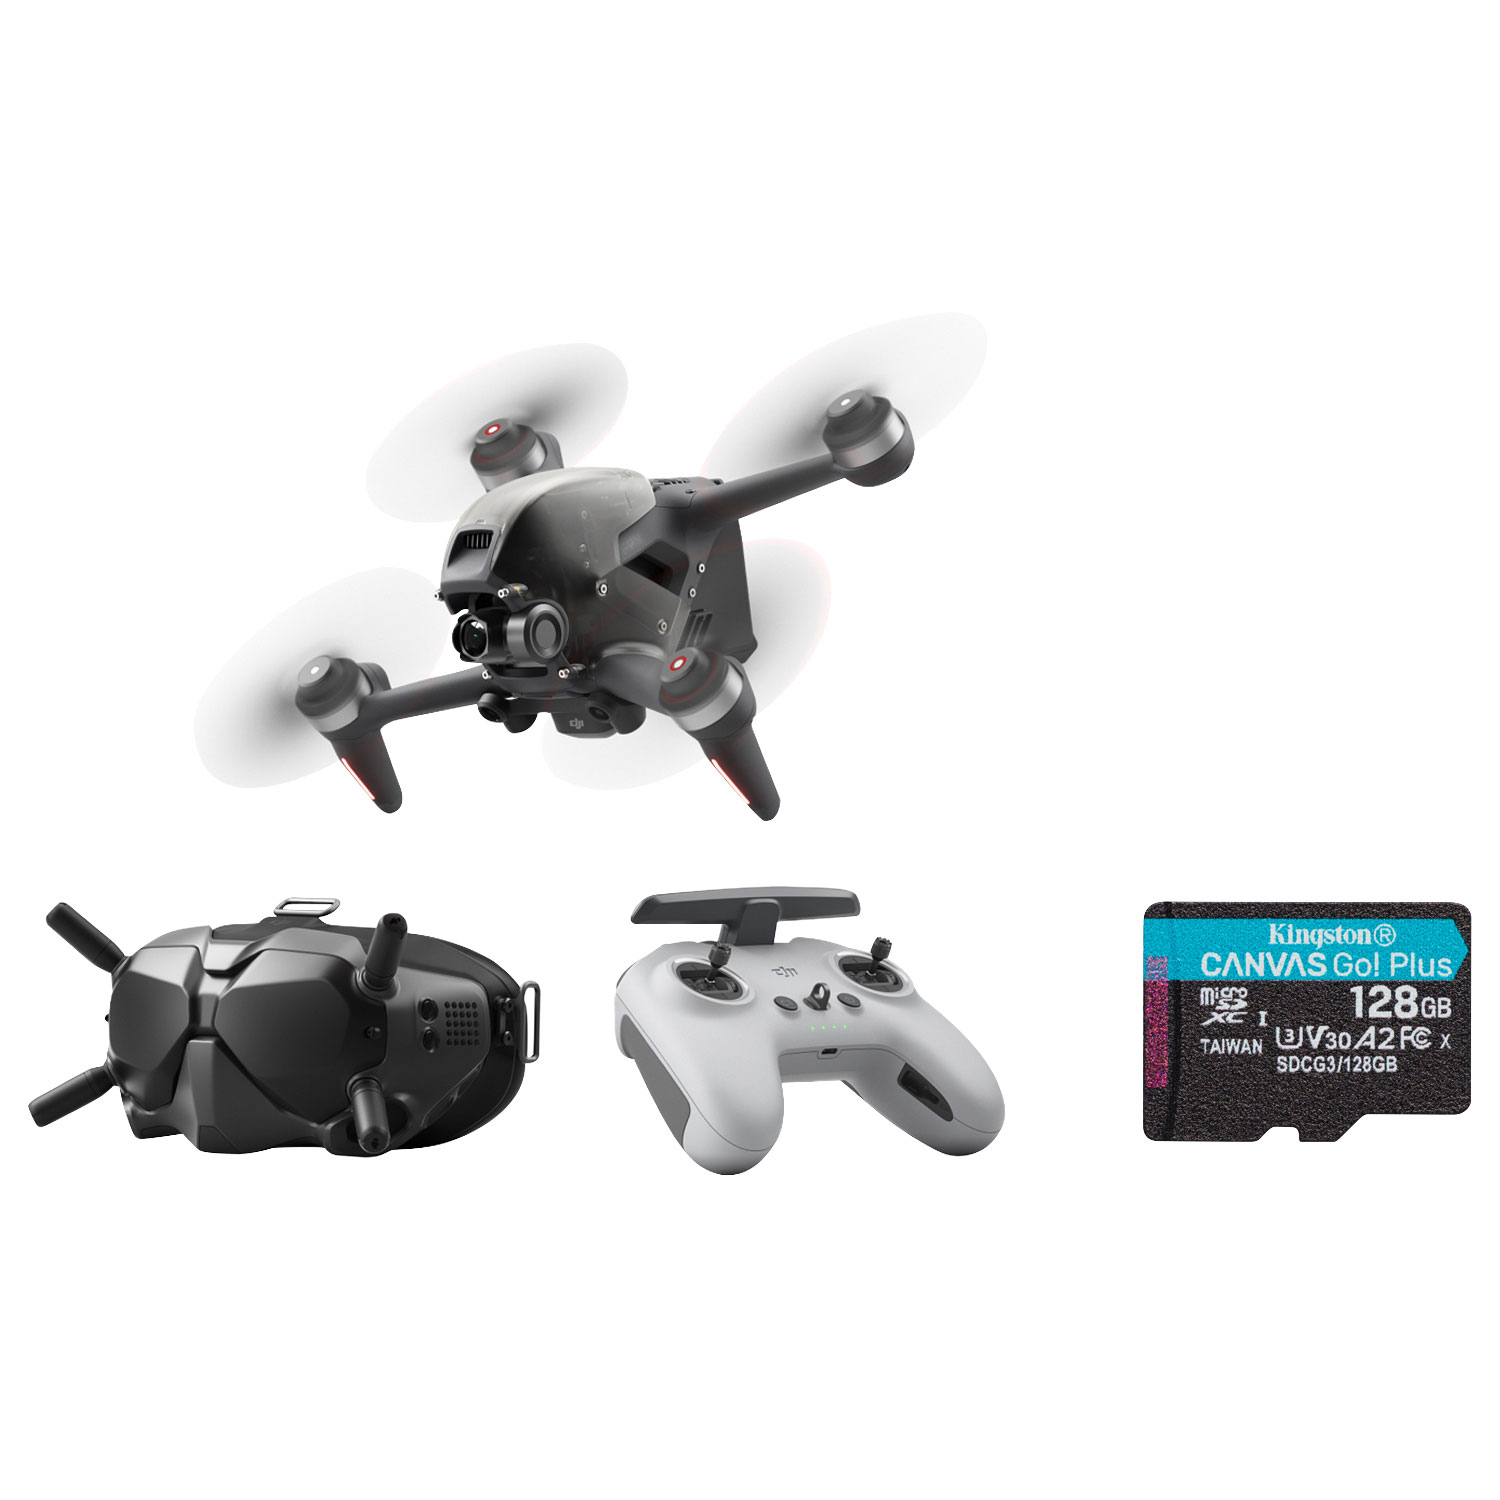 DJI FPV Quadcopter Drone Combo w/ Remote Control, Goggles & 128GB 170MB/s microSDXC Memory Card - Grey